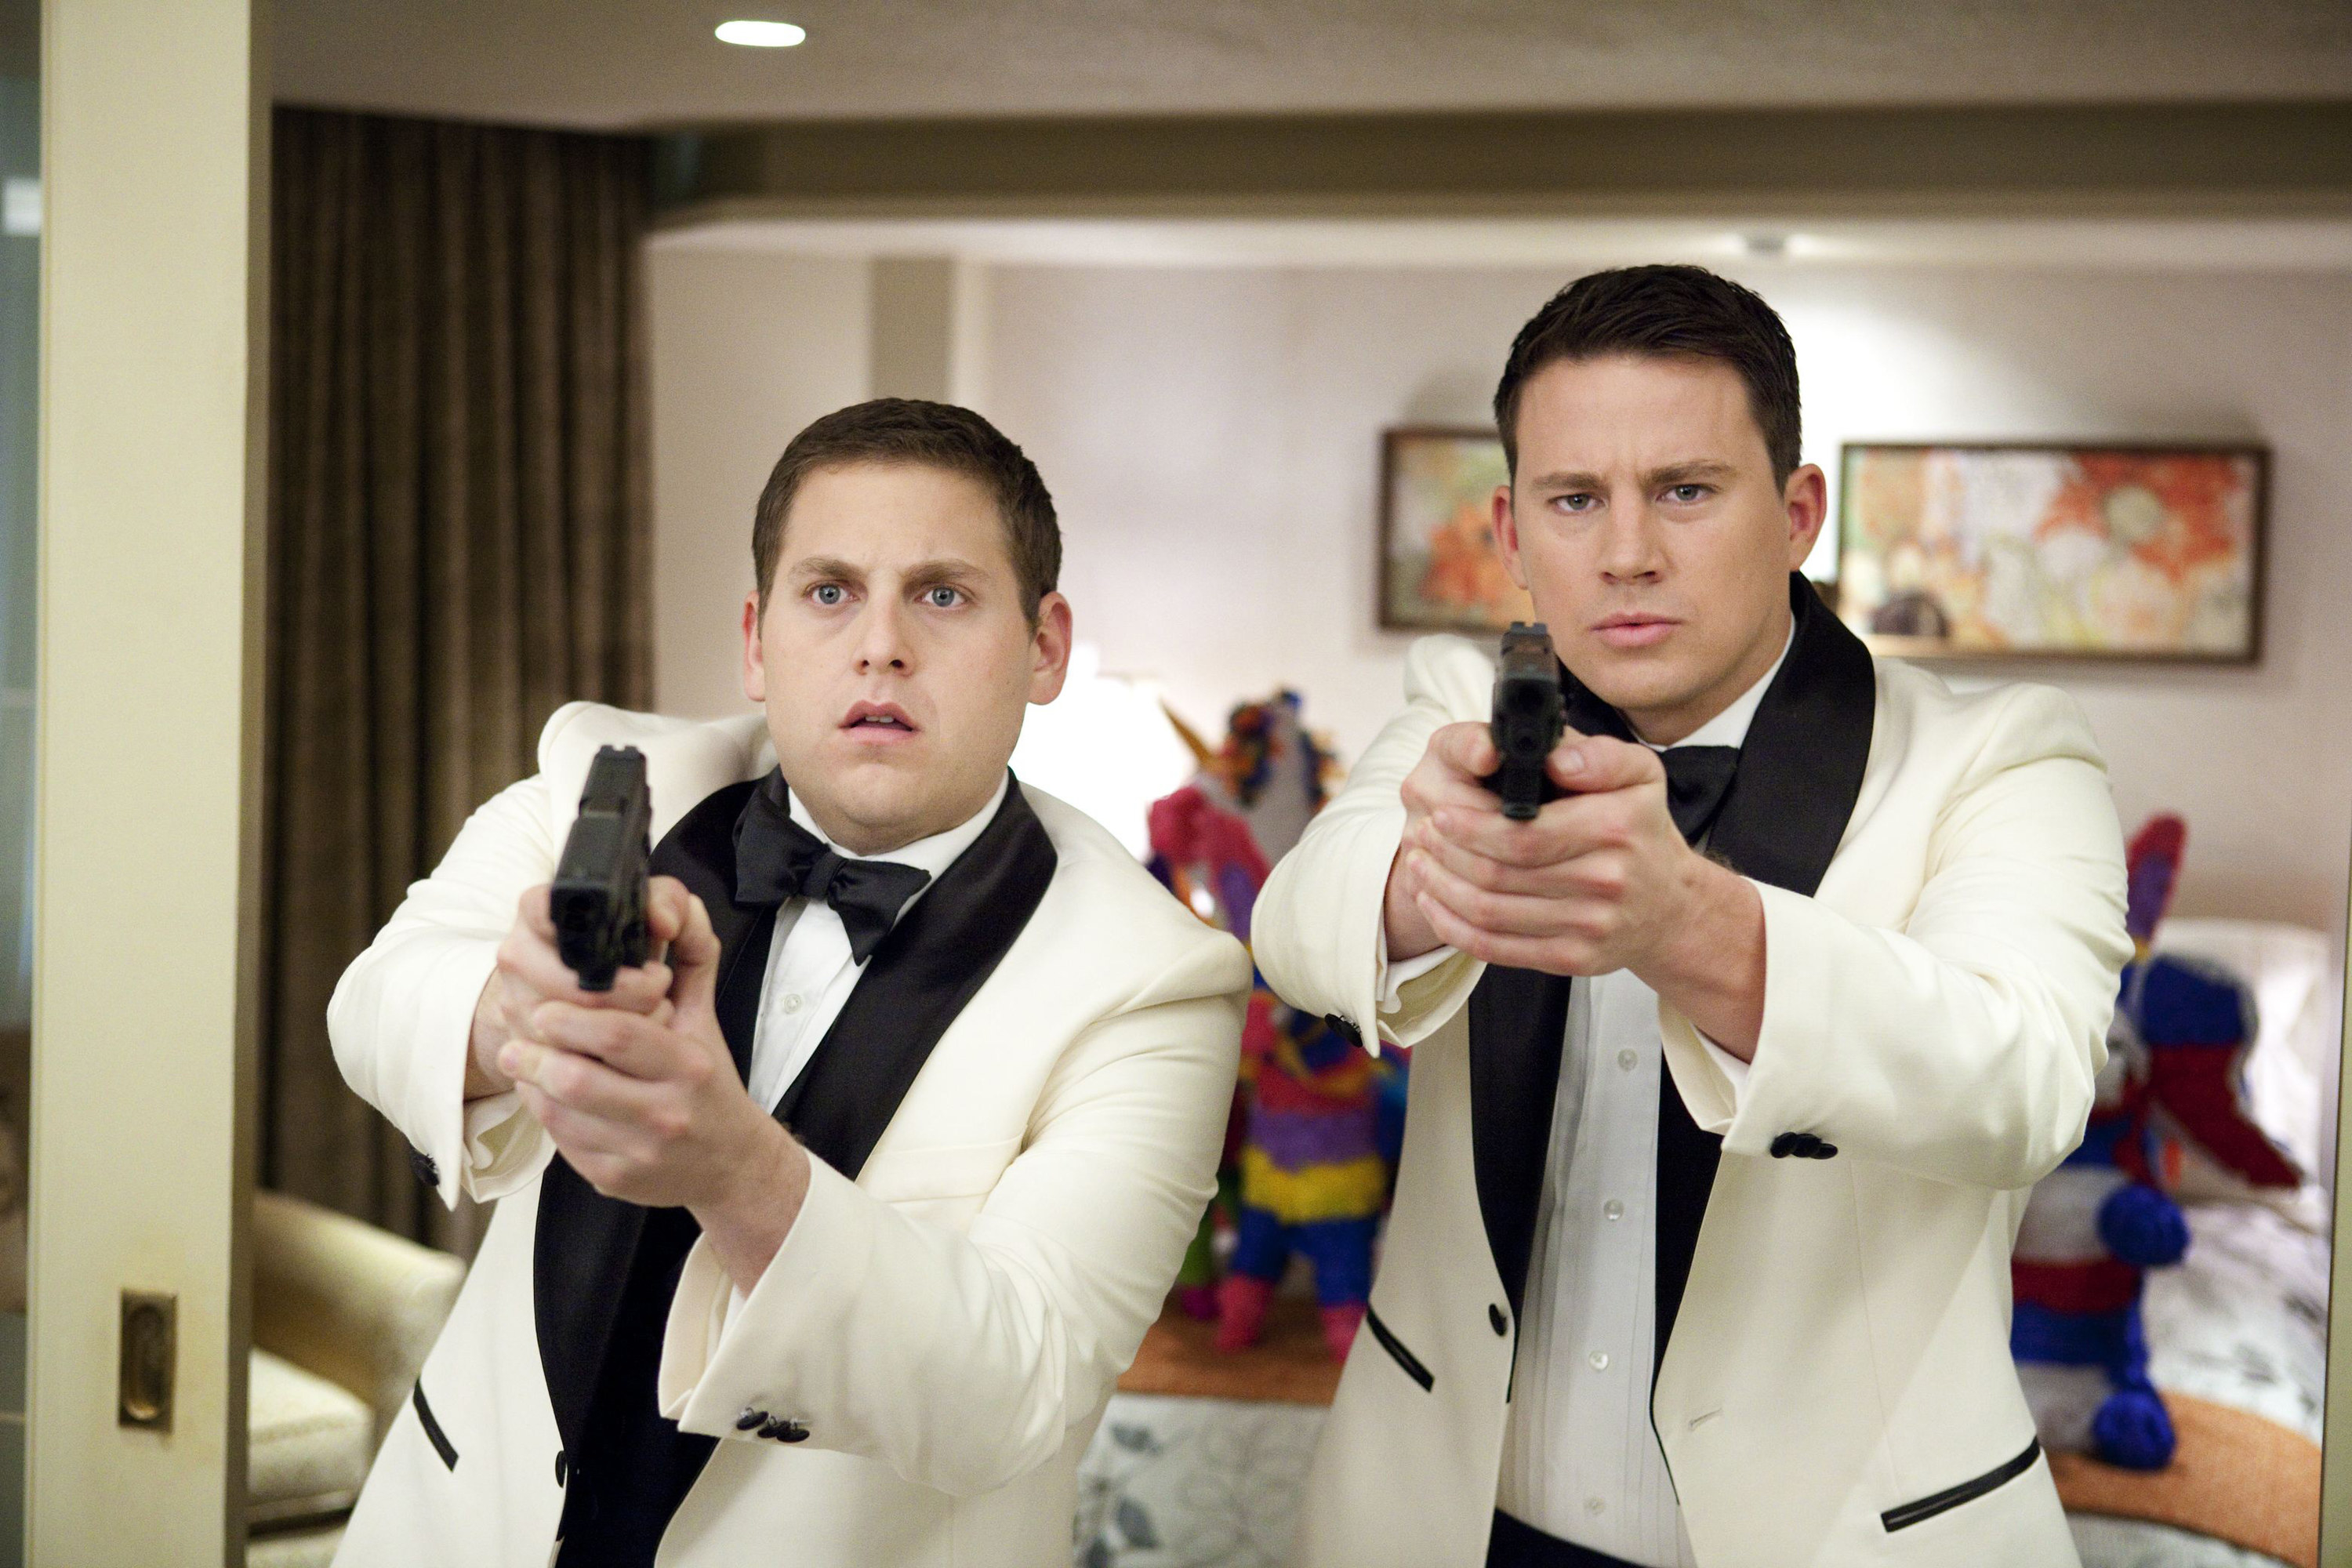 Tatum and Jonah Hill in tuxedos holding guns